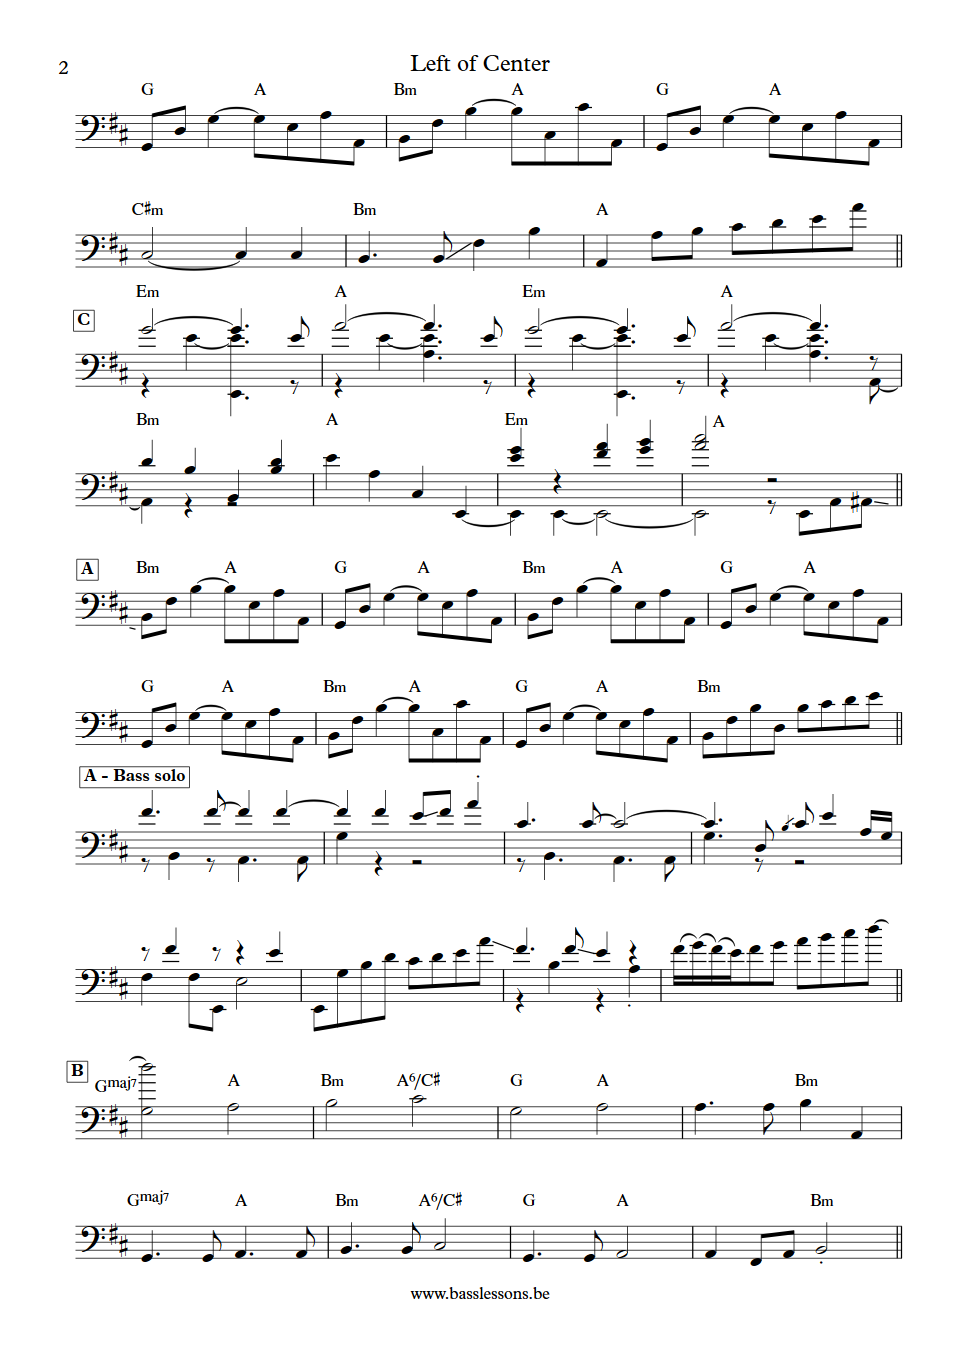 Suzanne Vega - Left of Center - Bass notation